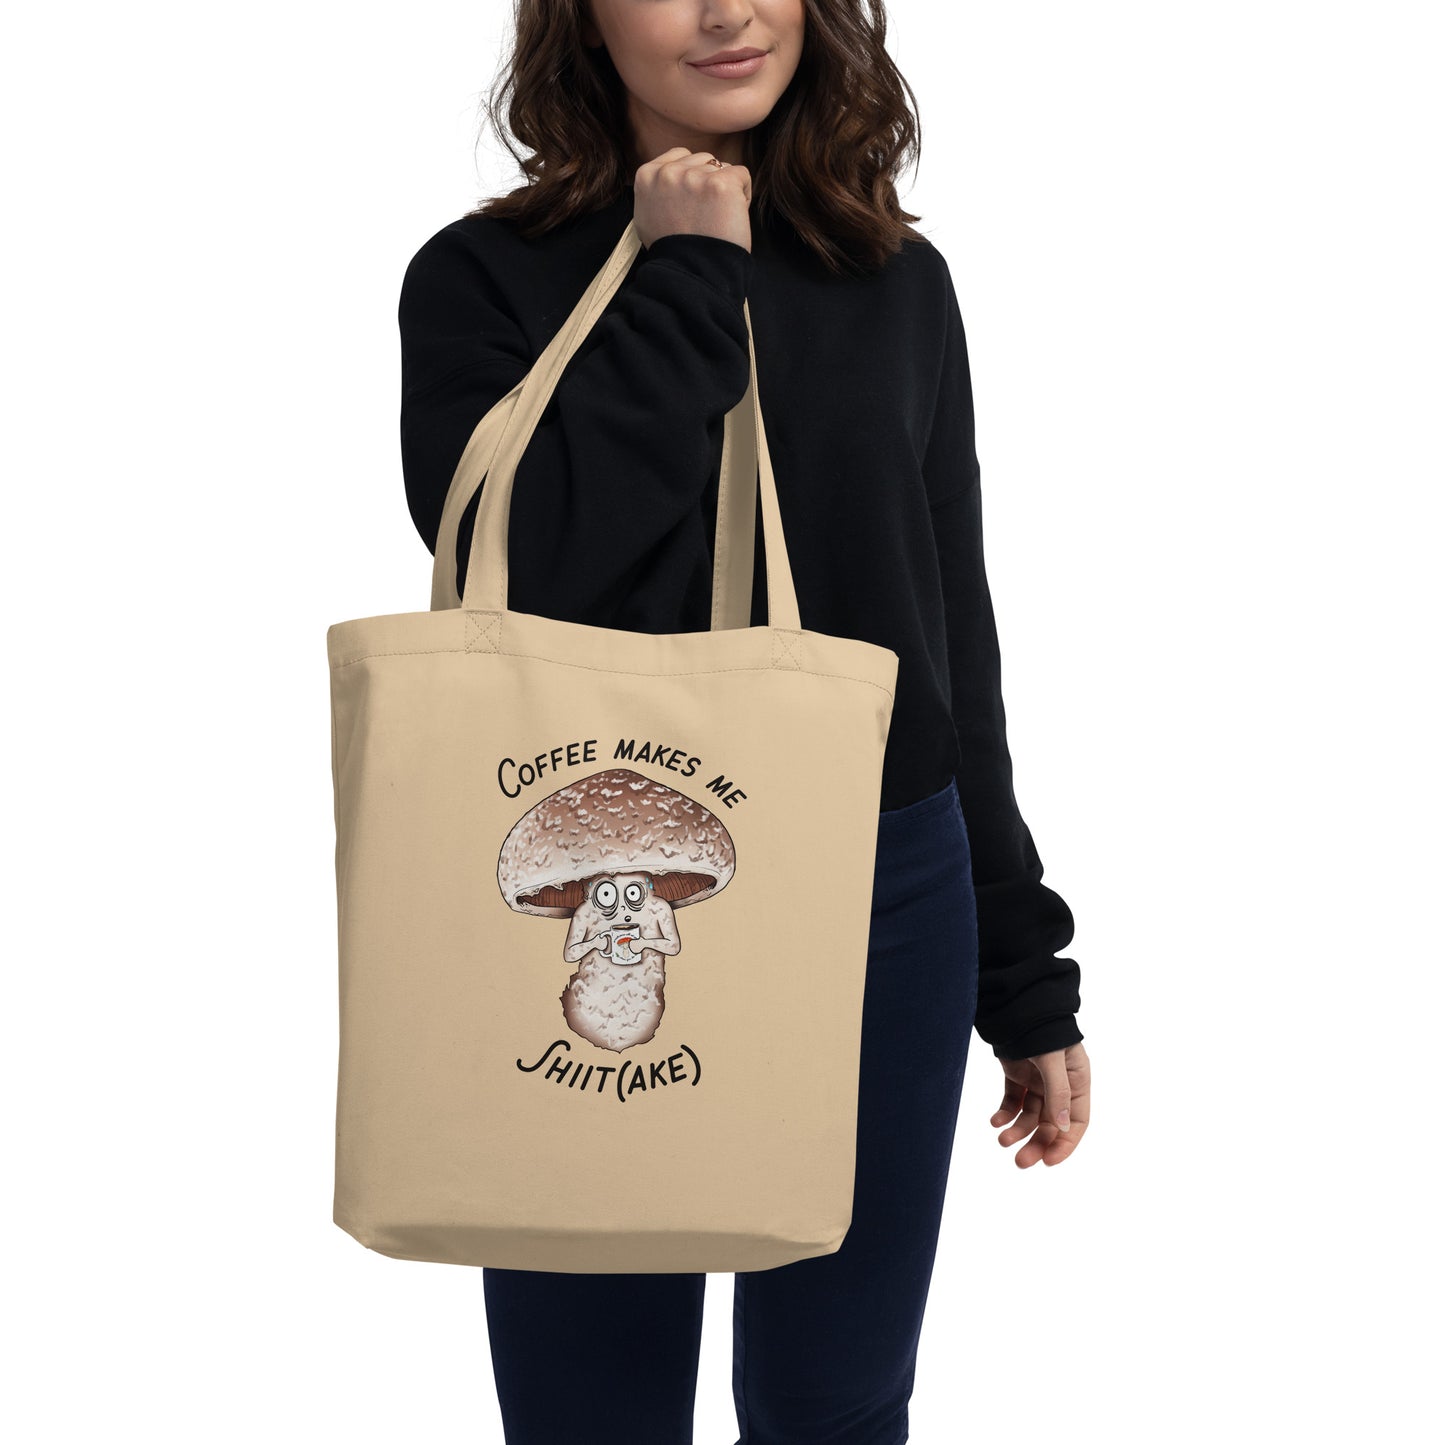 Coffee Makes Me Shiit(ake) | Funny Mushroom Artwork | Eco Tote Bag